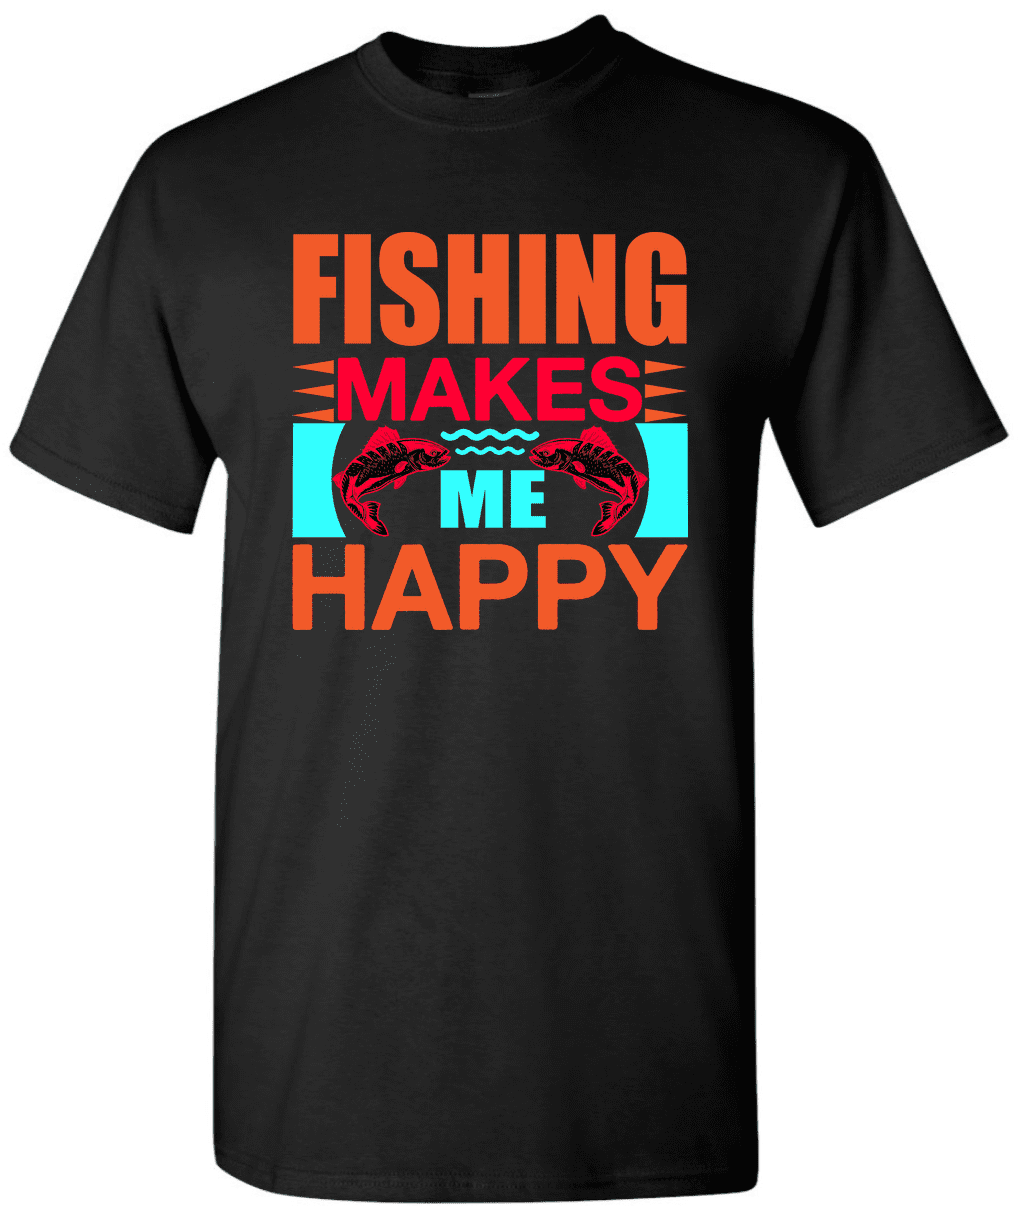 Fishing Makes Me Happy - Fishing T-Shirt Novelty Fishing Shirt 